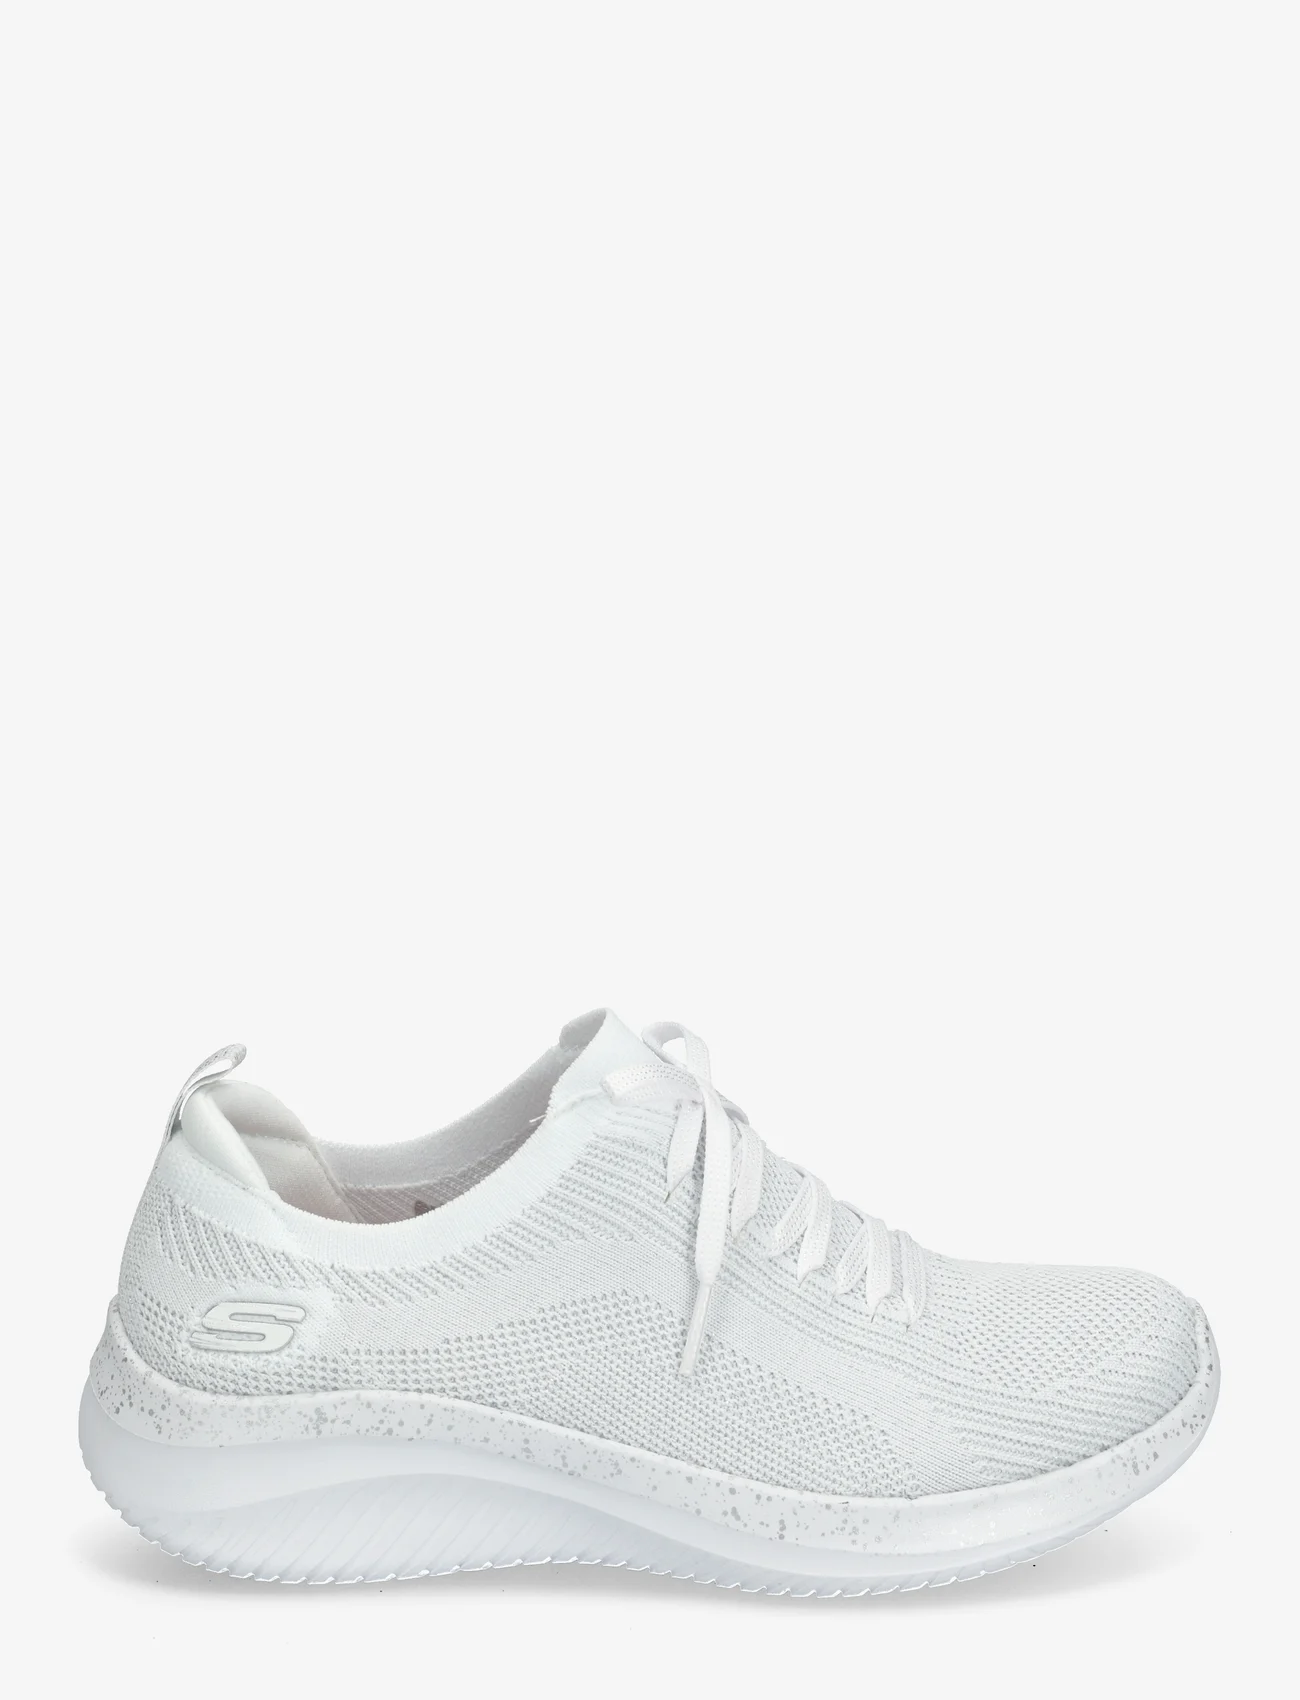 Skechers - Womens Ultra Flex 3.0 - Lets Dance - lave sneakers - wsl white silver - 1